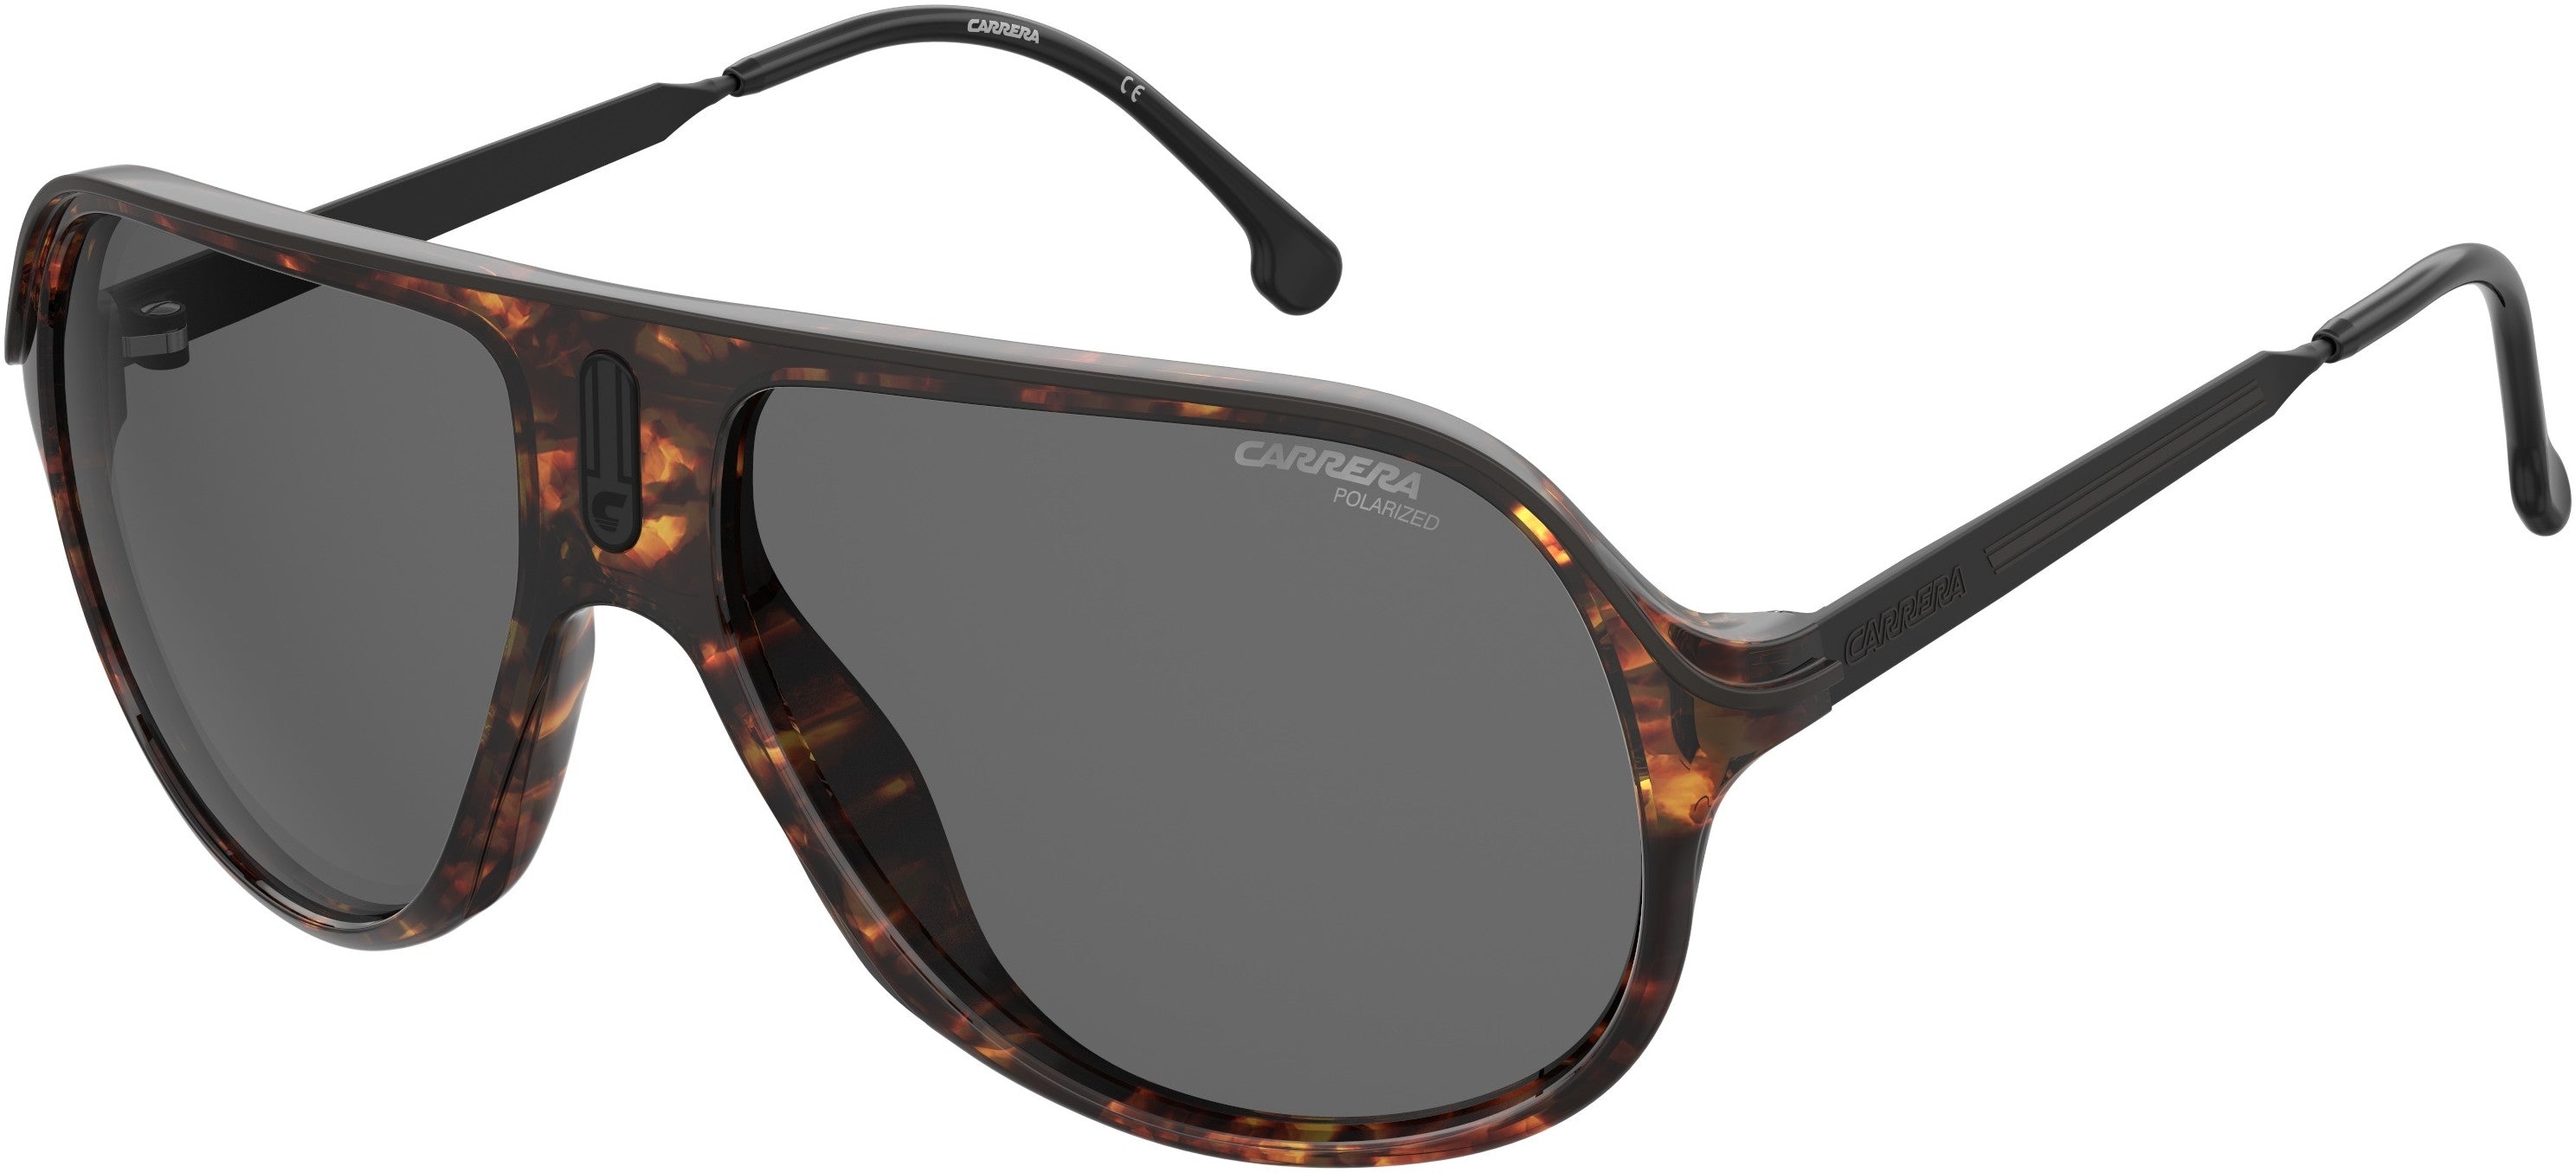 Carrera Safari 65 Rectangular Sunglasses 0WR9-0WR9  Brown Havana (M9 Gray Pz)